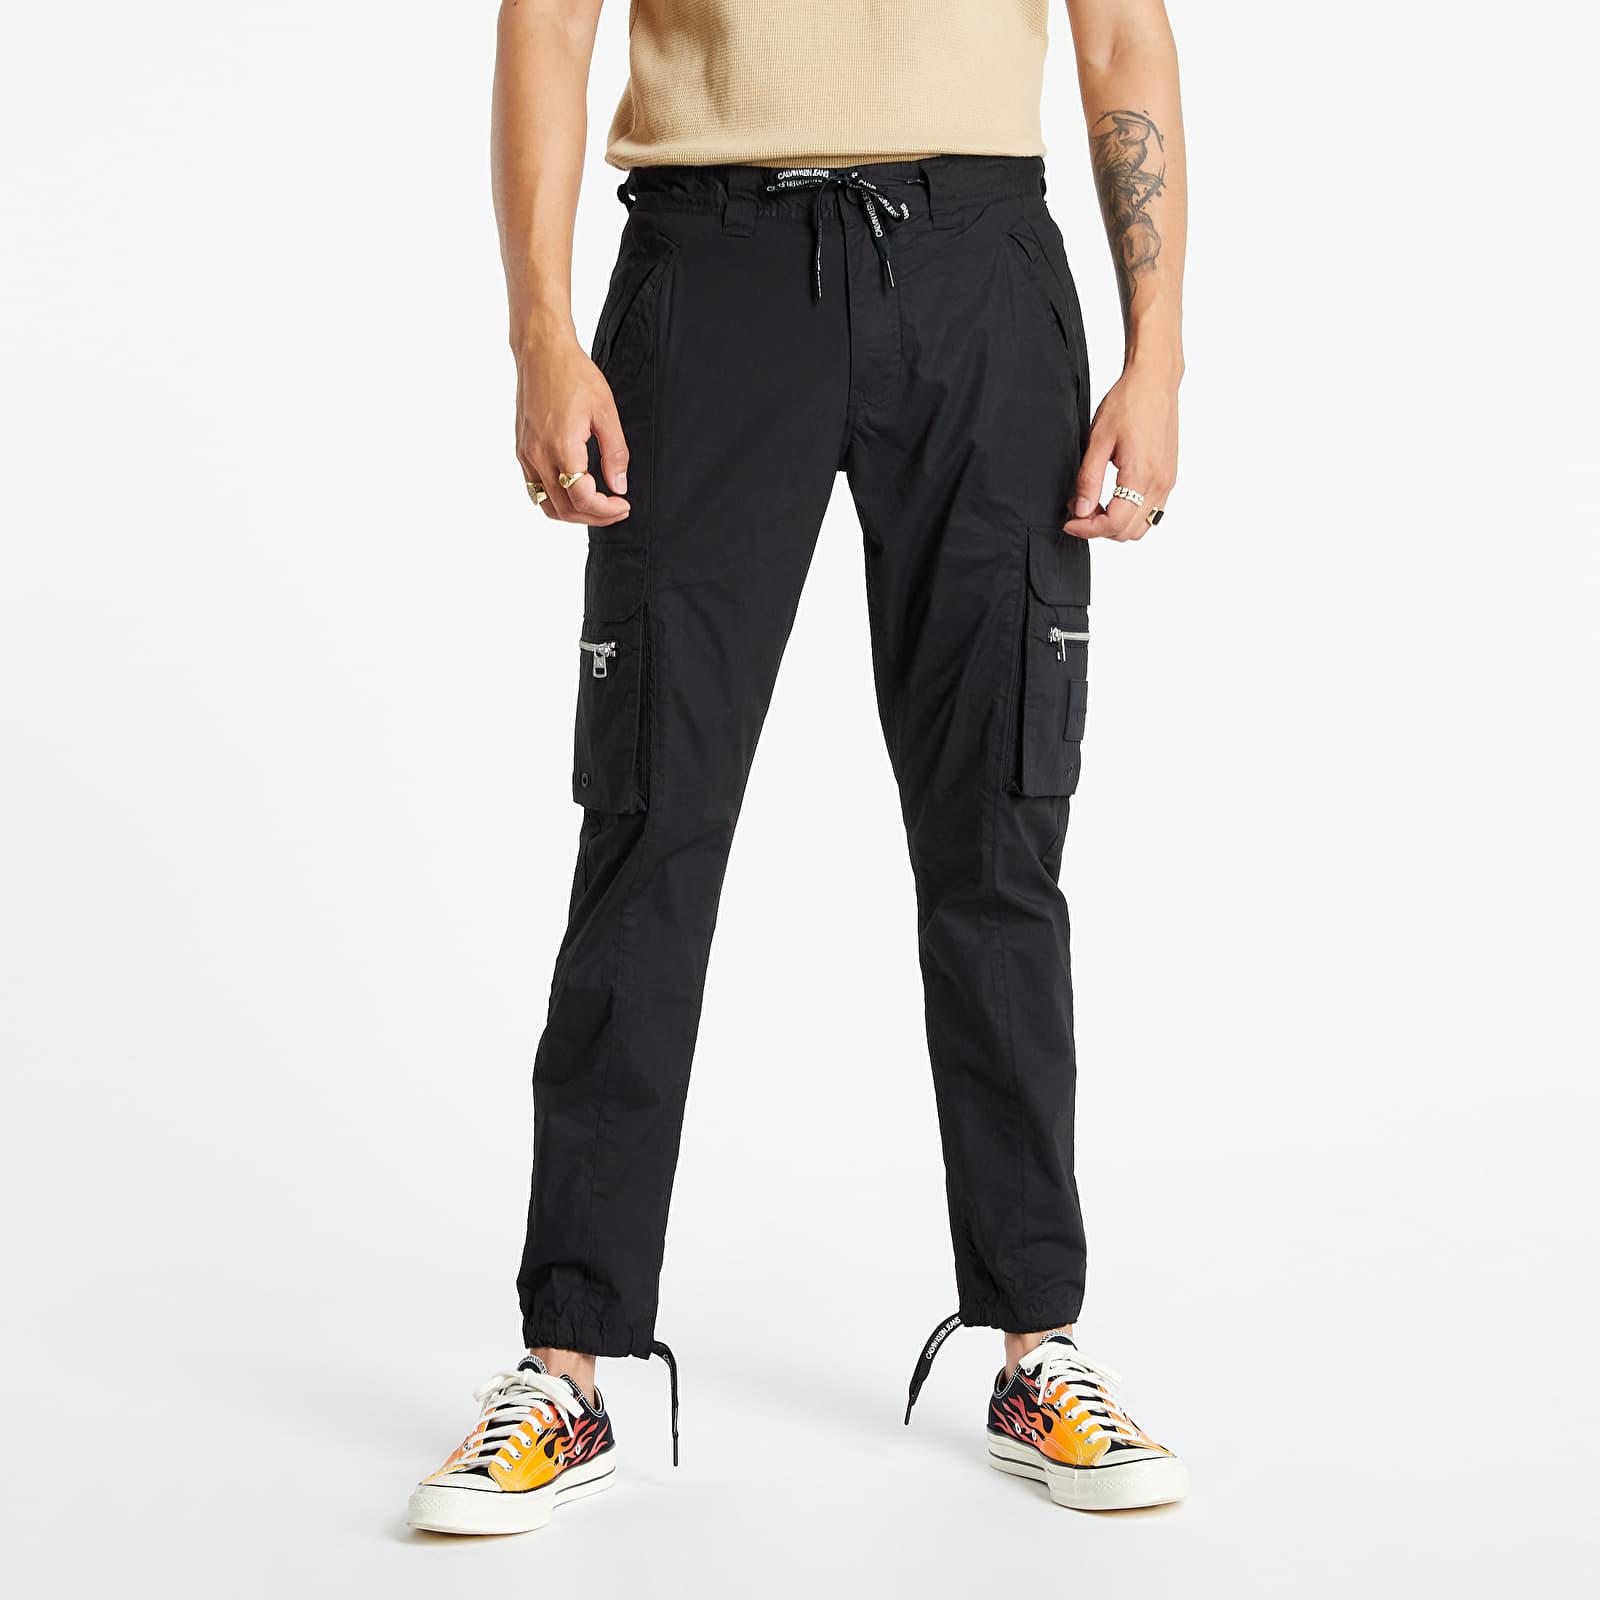 PacSun Stretch Canvas Olive Slim Cargo Pants | PacSun | Cargo pants outfit  men, Mens pants fashion, Pants outfit men